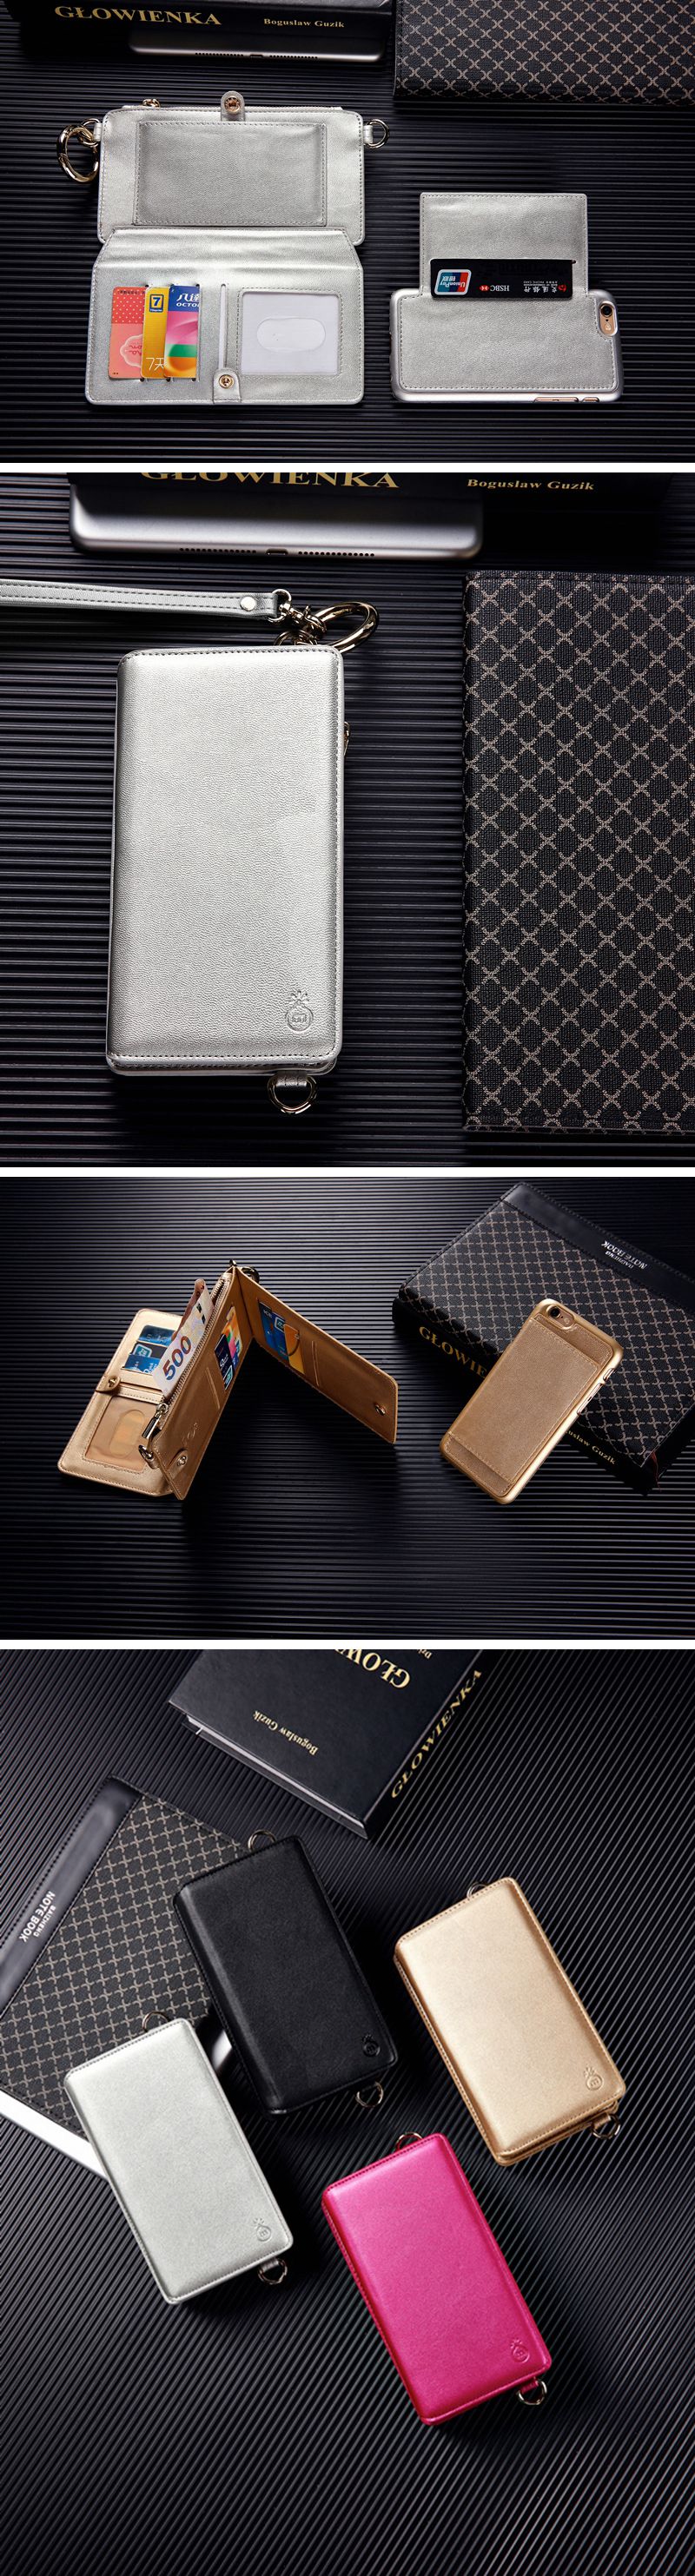 Removable PU Leather Clutch Wallet Holder Filp Card Case Shoulder Bag Women Purse For iPhone 6 6S